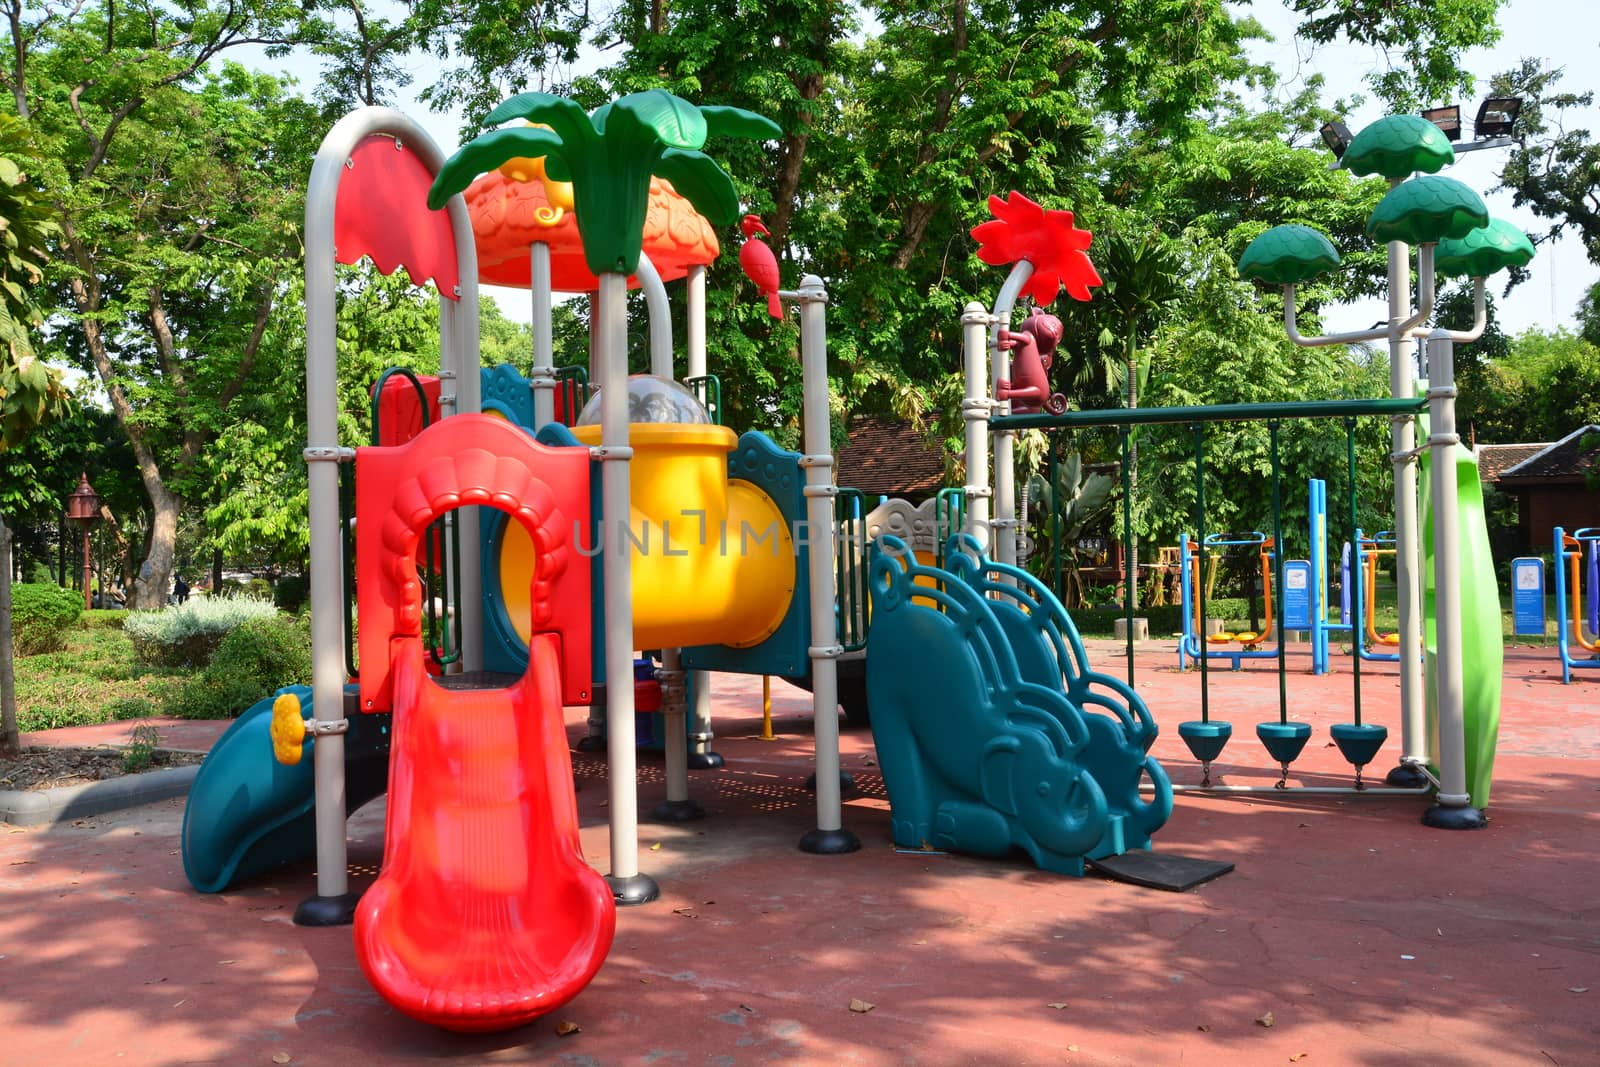 Children's playground in a city park, Playground for children. by ideation90